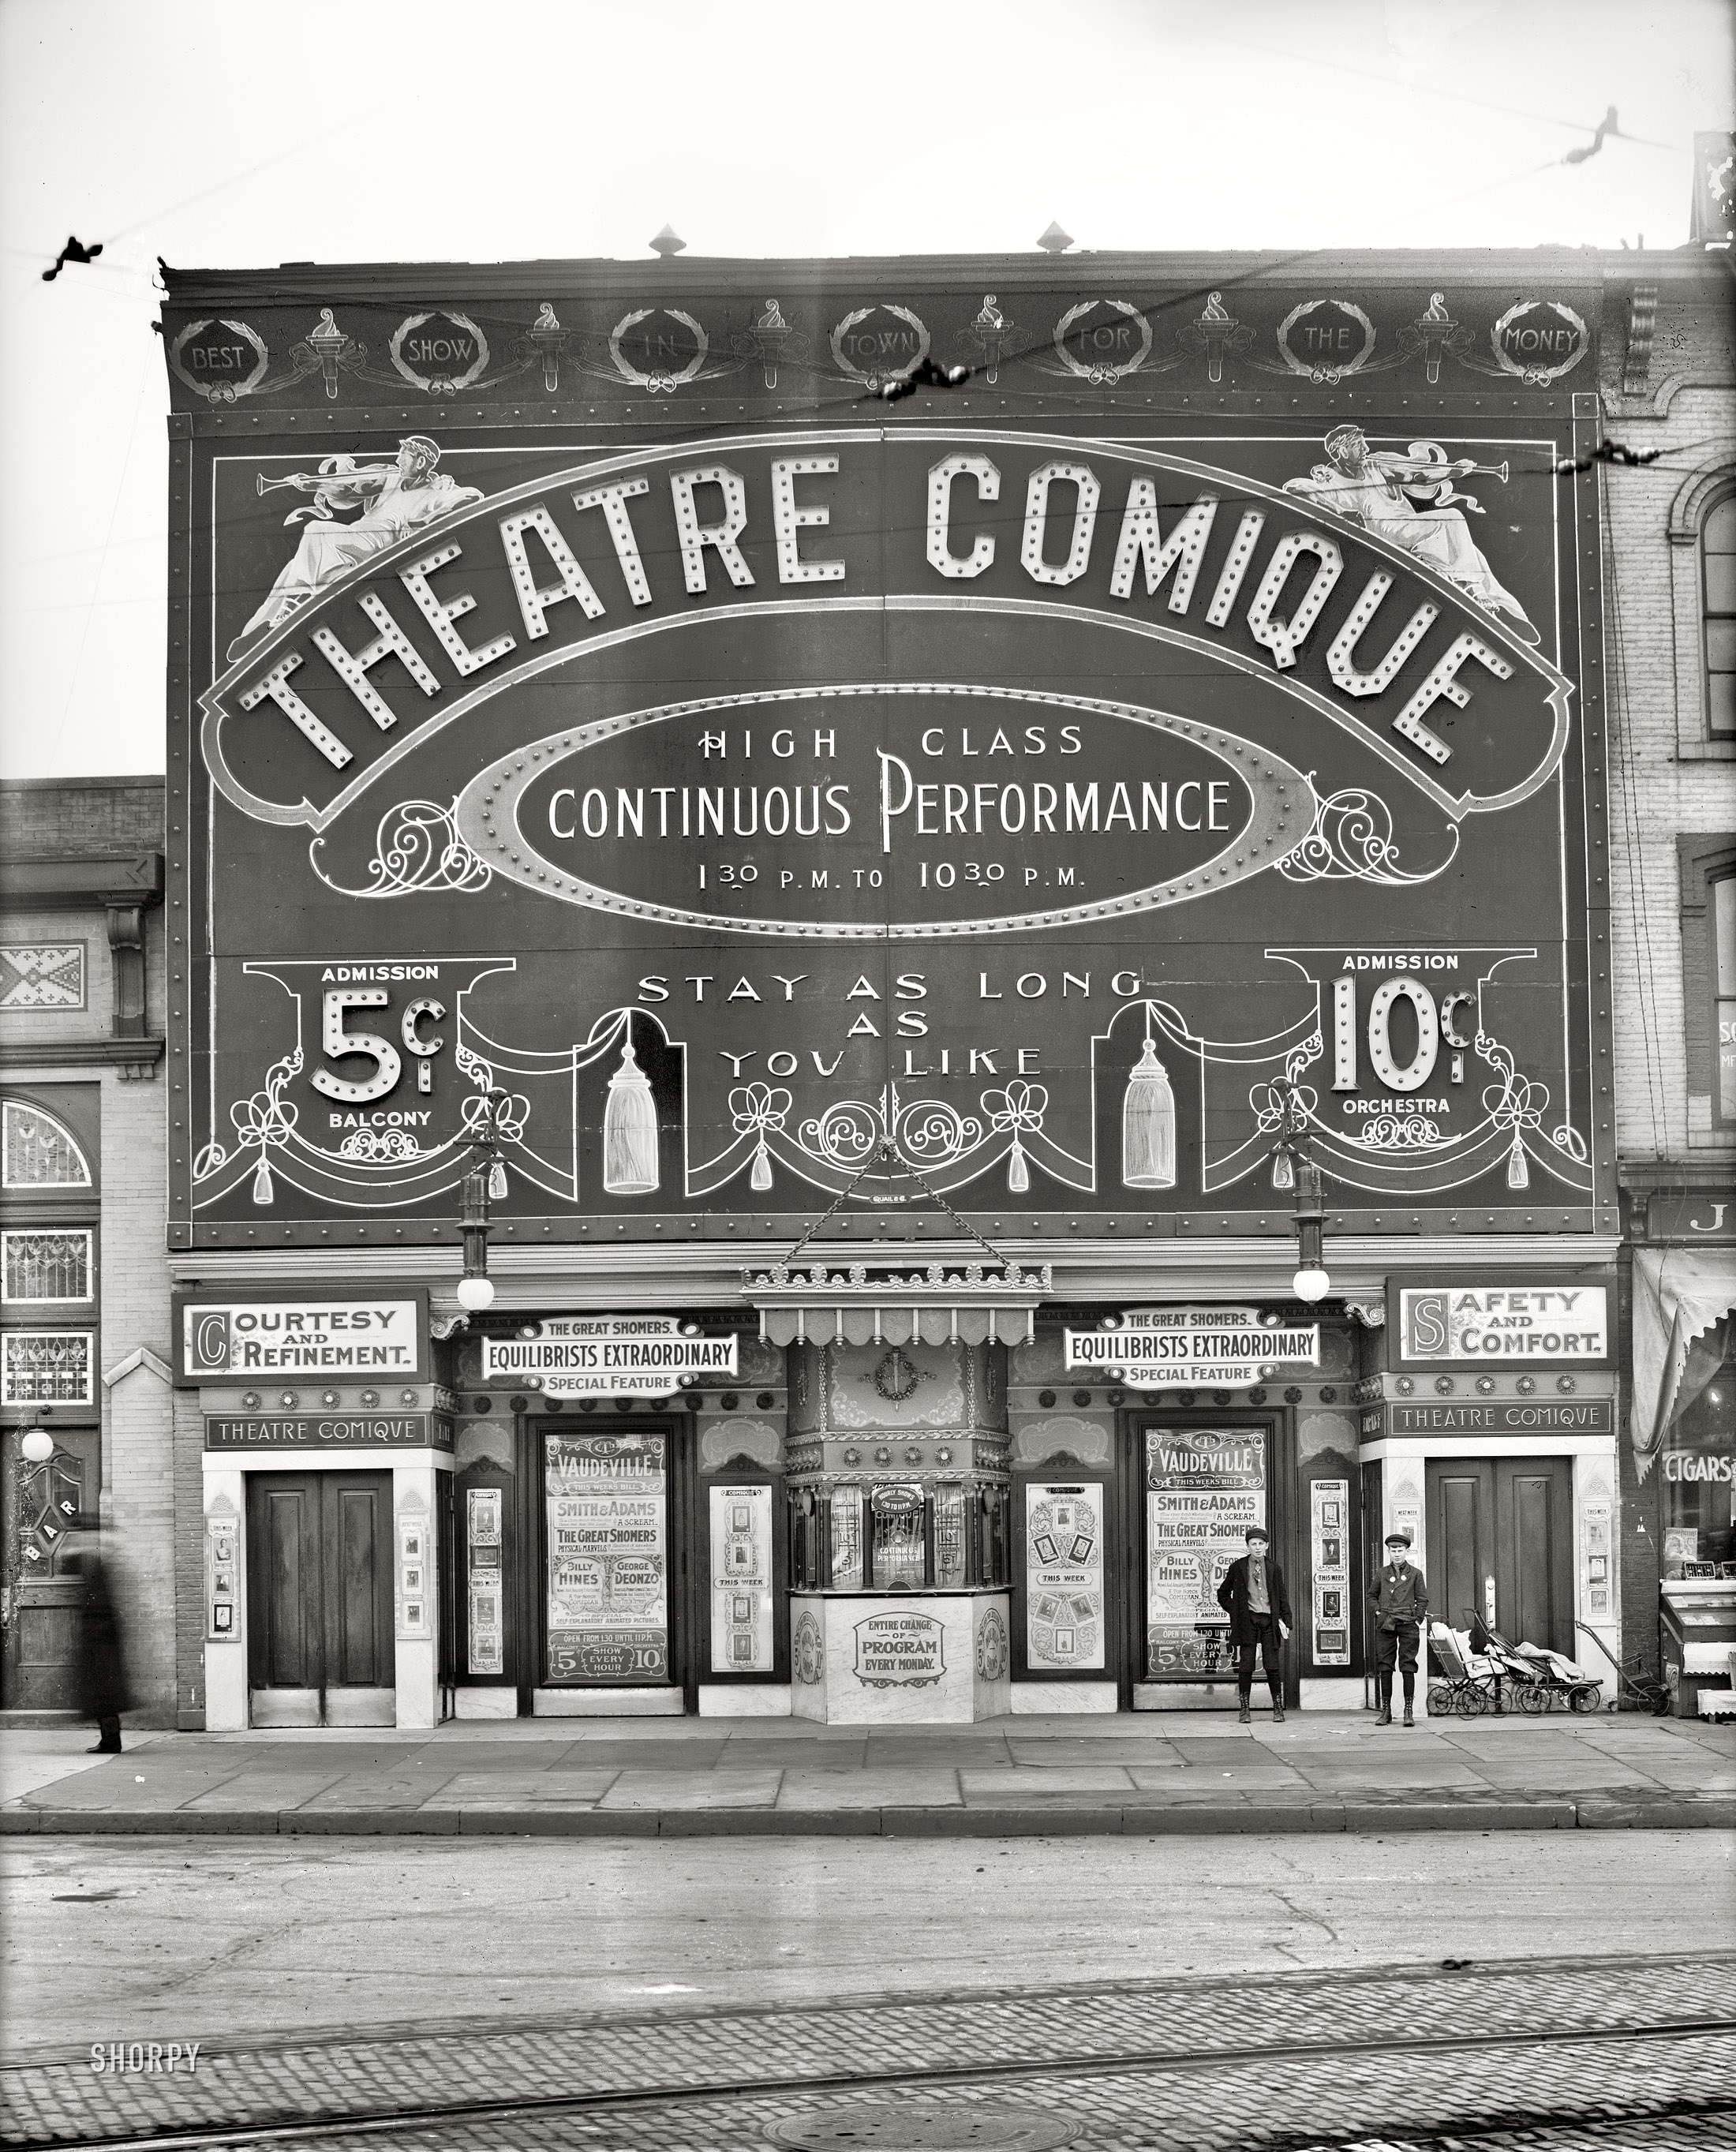 Detroit, Michigan, circa 1910. "Theatre Comique." Bring the kids! 8x10 inch dry plate glass negative, Detroit Publishing Company. View full size.